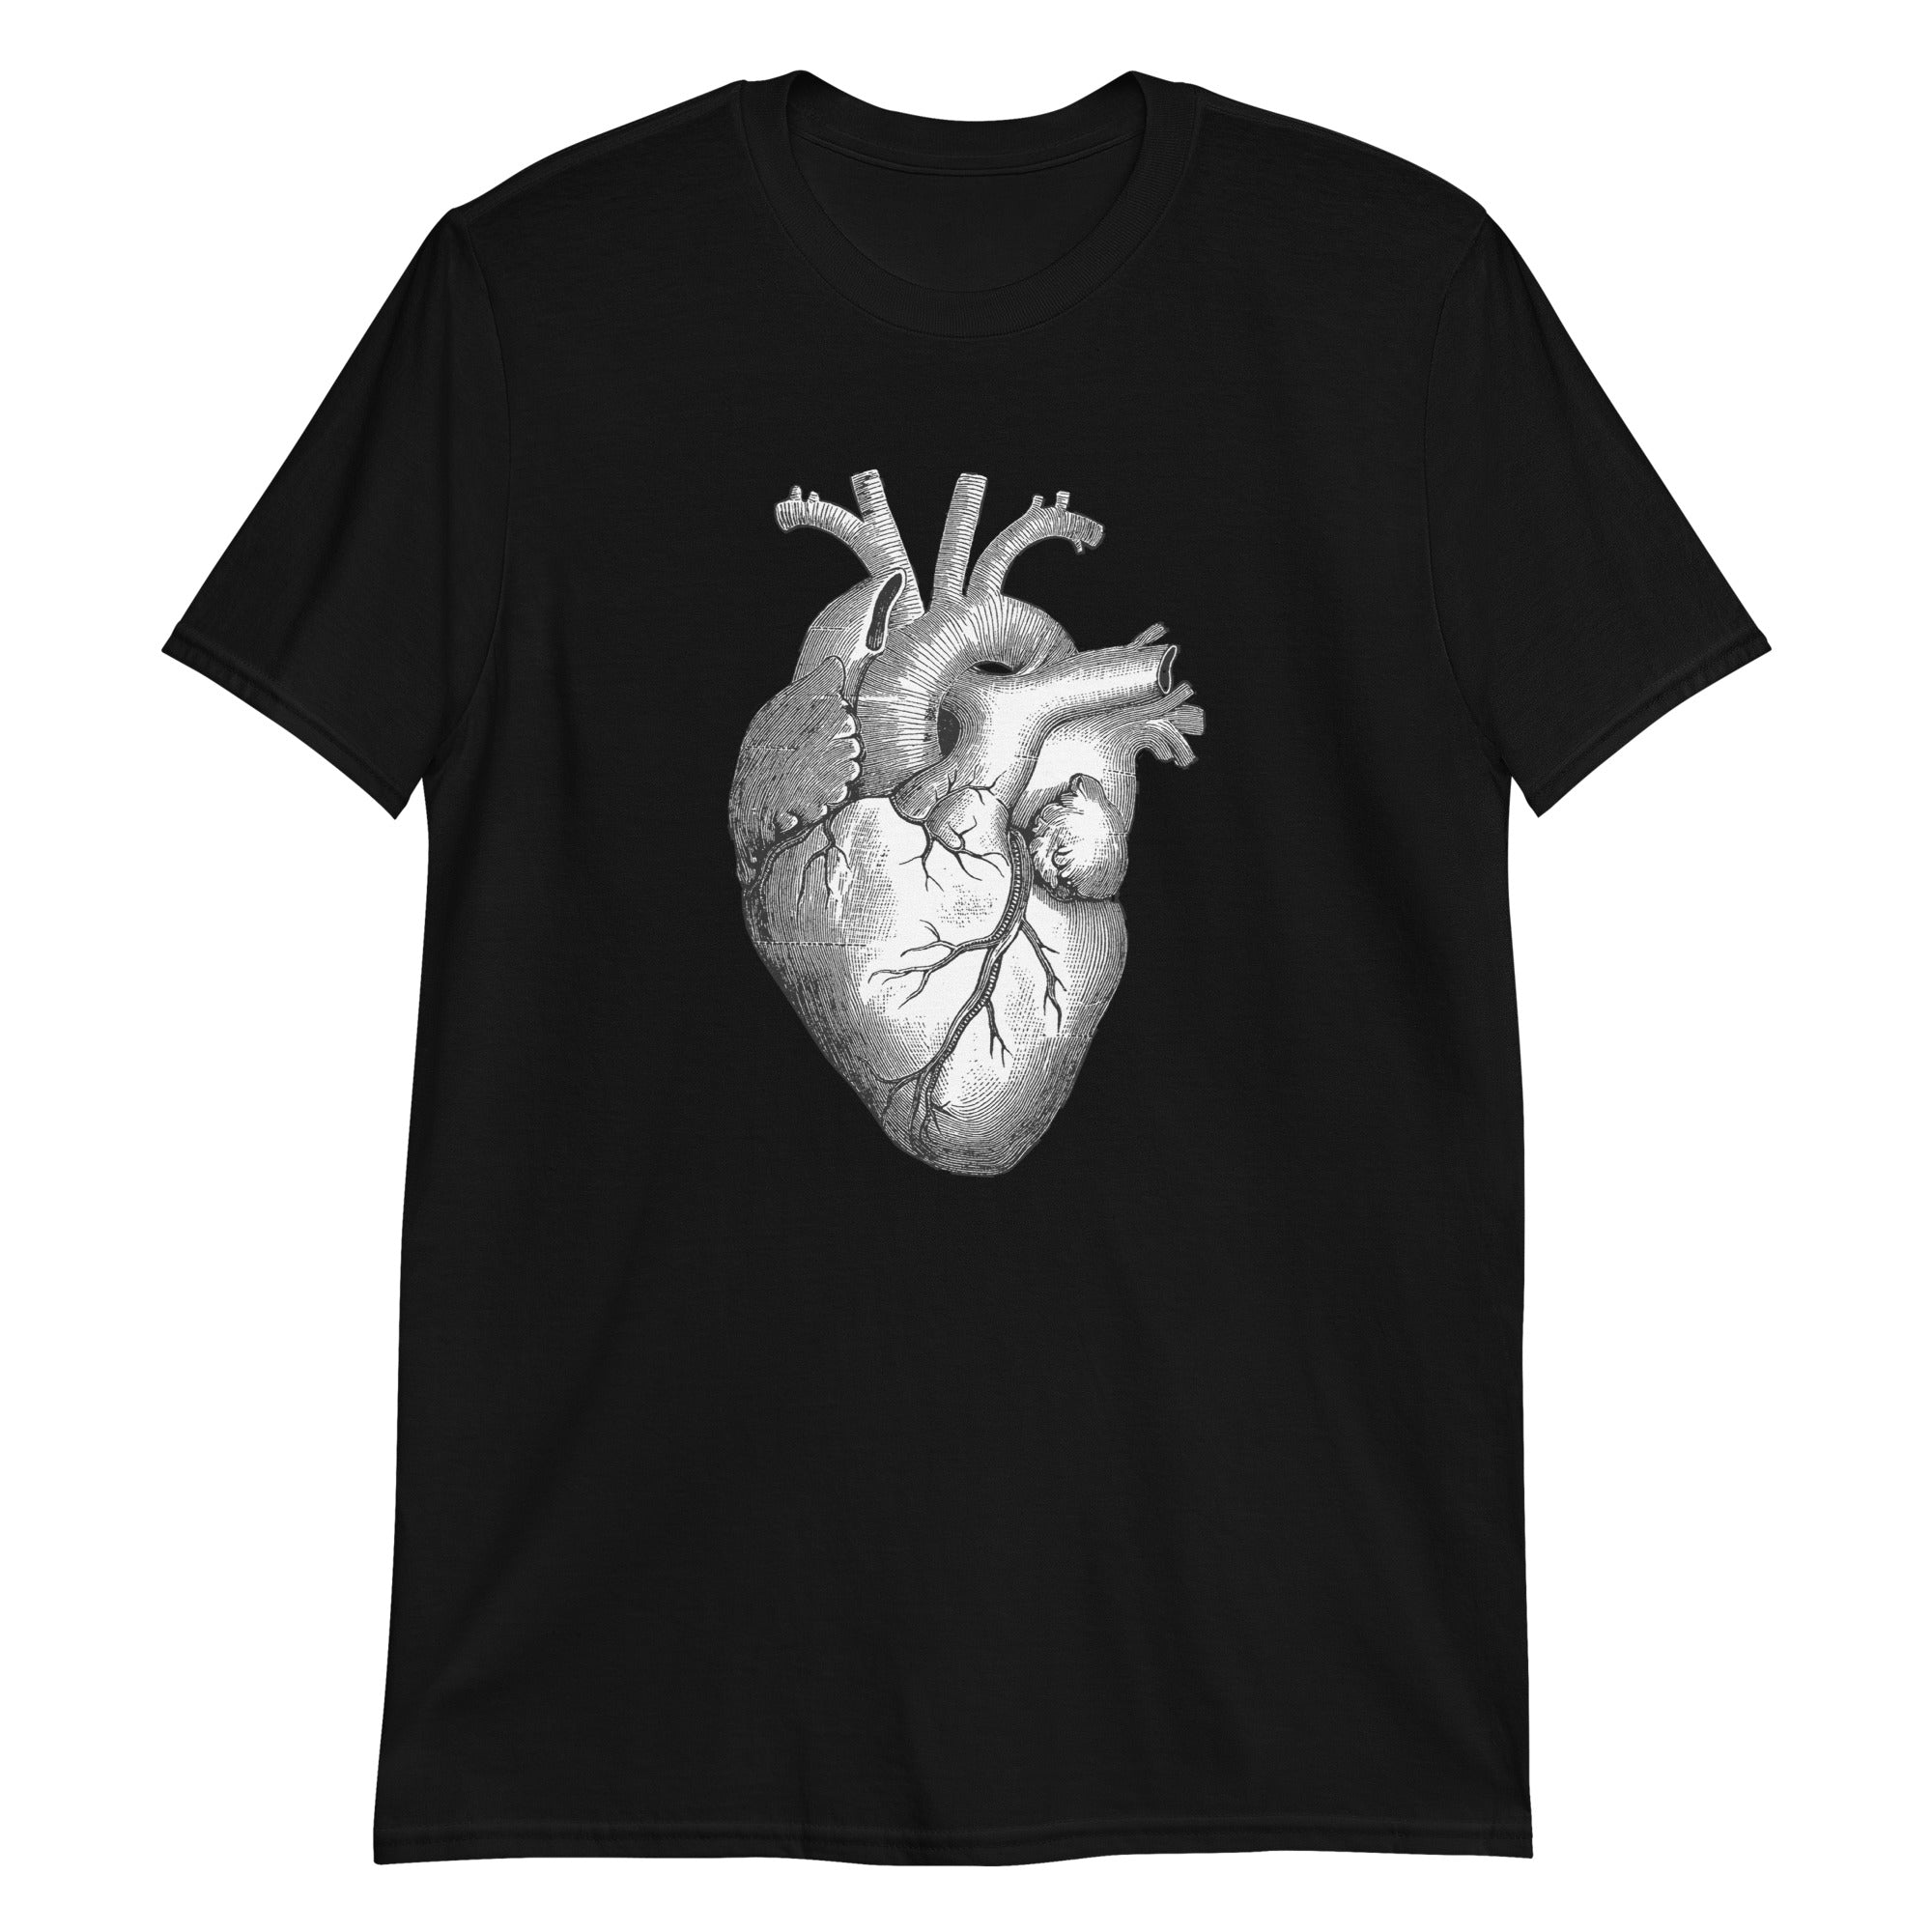 Anatomical Human Heart Medical Art Men's Short Sleeve T-Shirt Black and White - Edge of Life Designs